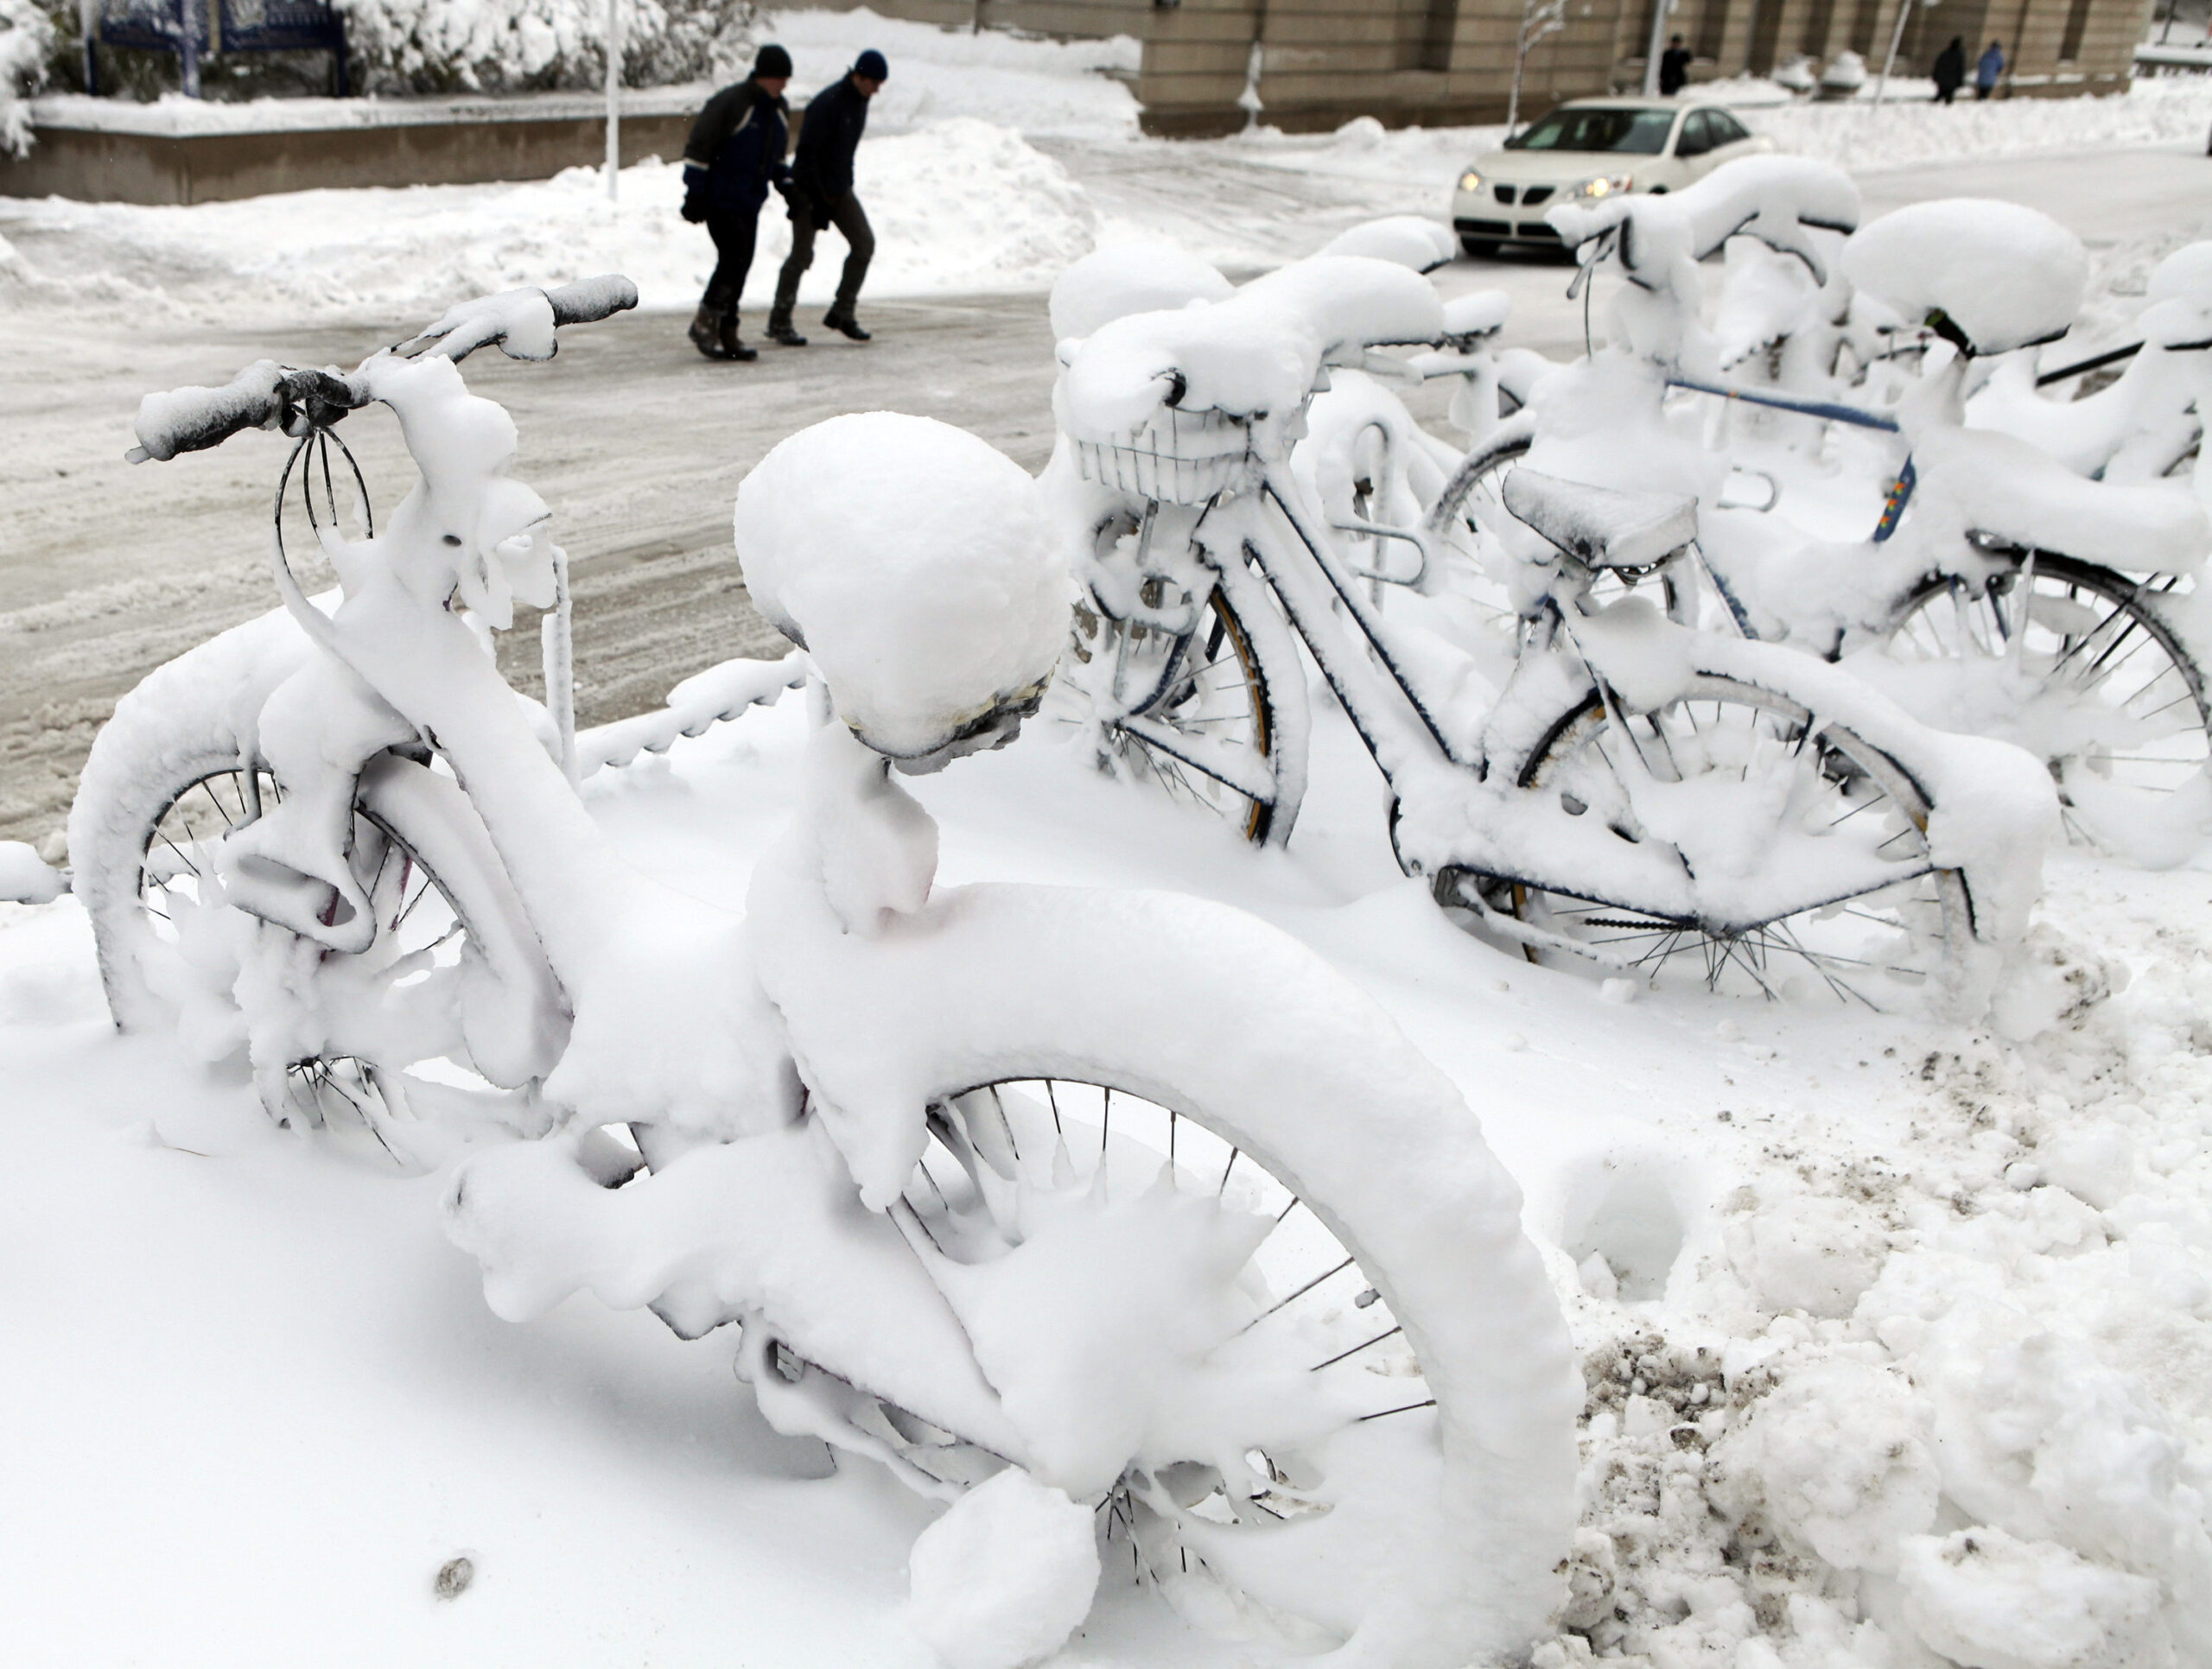 Snow-covered bikes